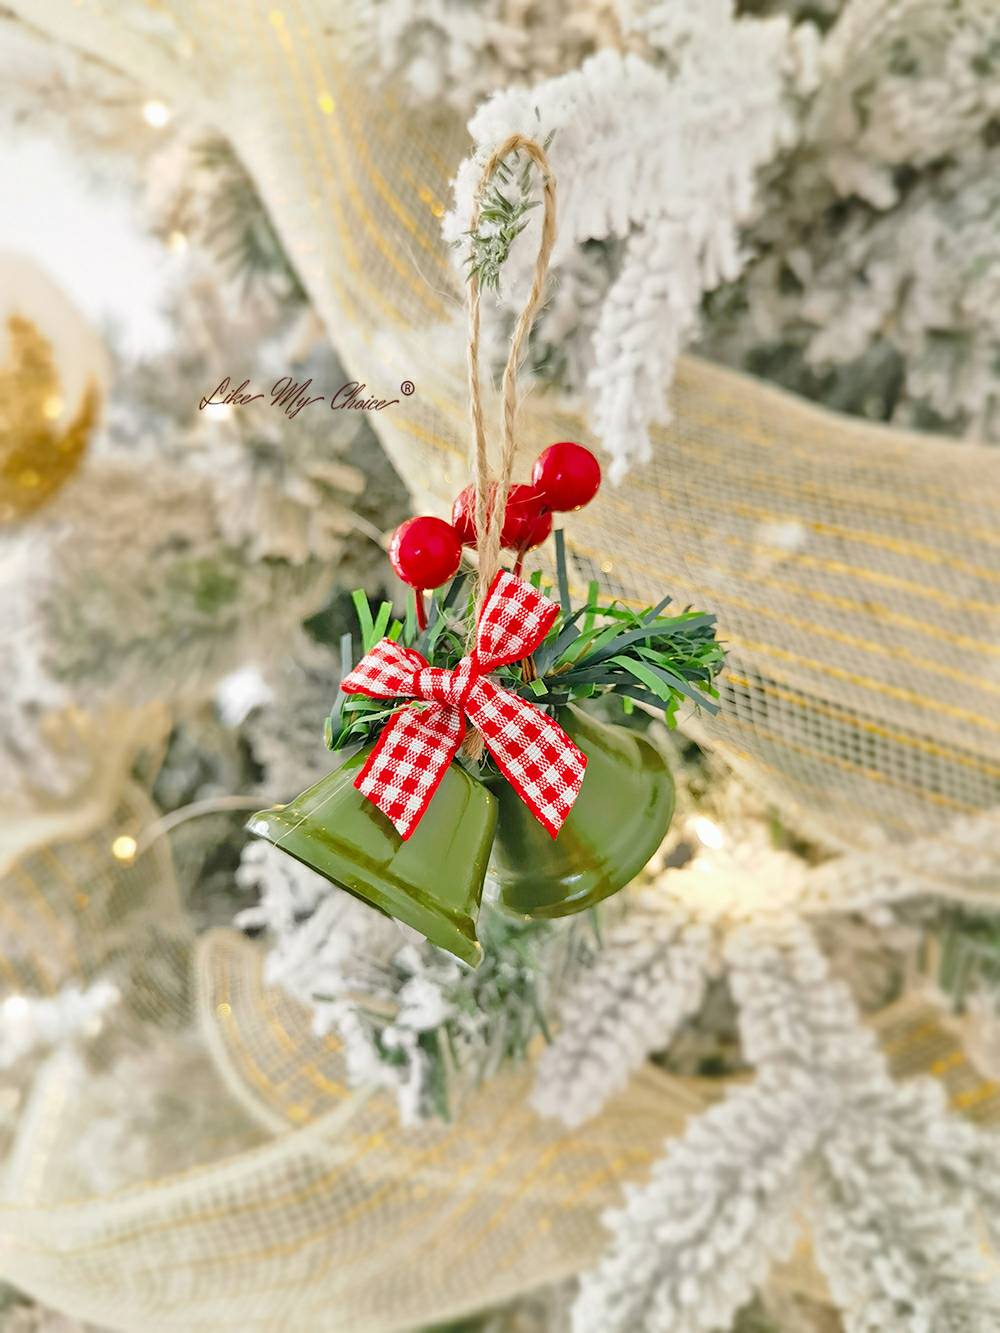 Pingente de árvore de Natal com janela de sino de chifre duplo de Natal